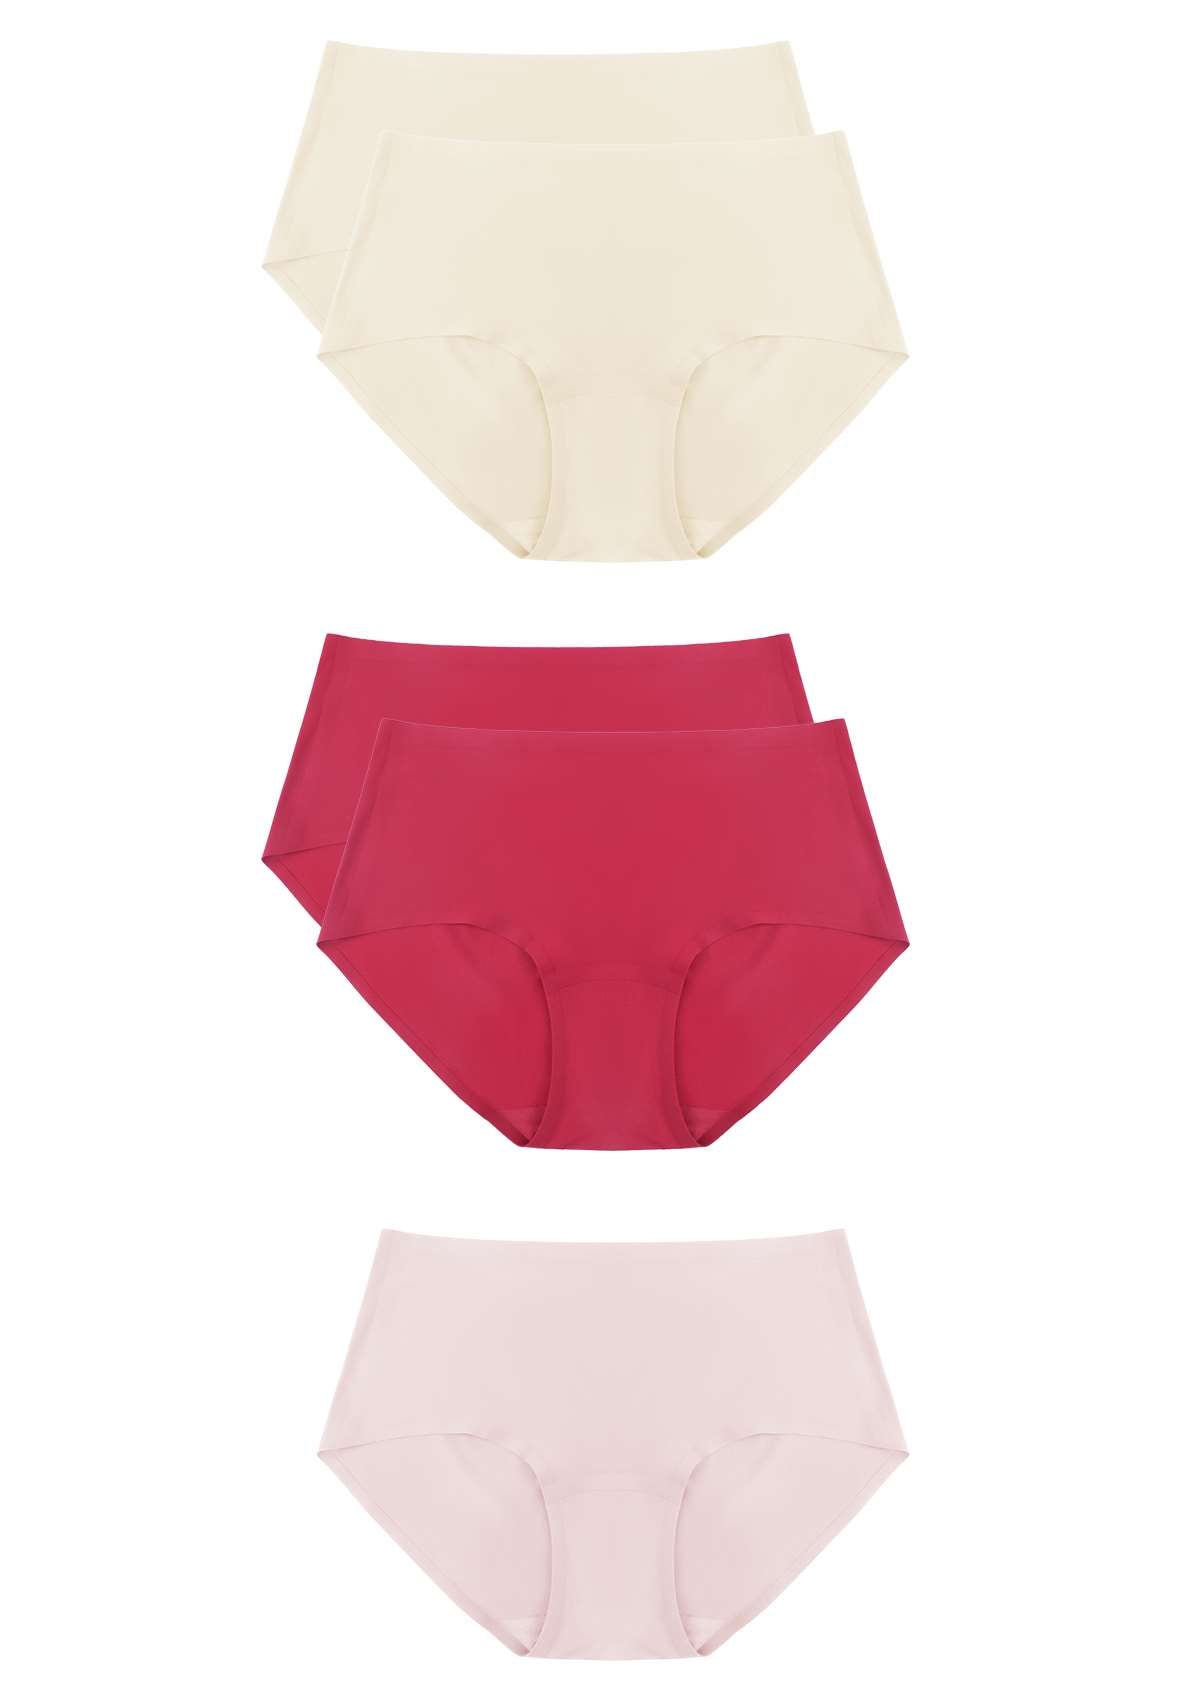 HSIA FlexiFit Soft Stretch Seamless Brief Underwear Bundle - 10 Packs/$35 / XS-L / 2*Peach Beige+2*Red+Dusty Rose